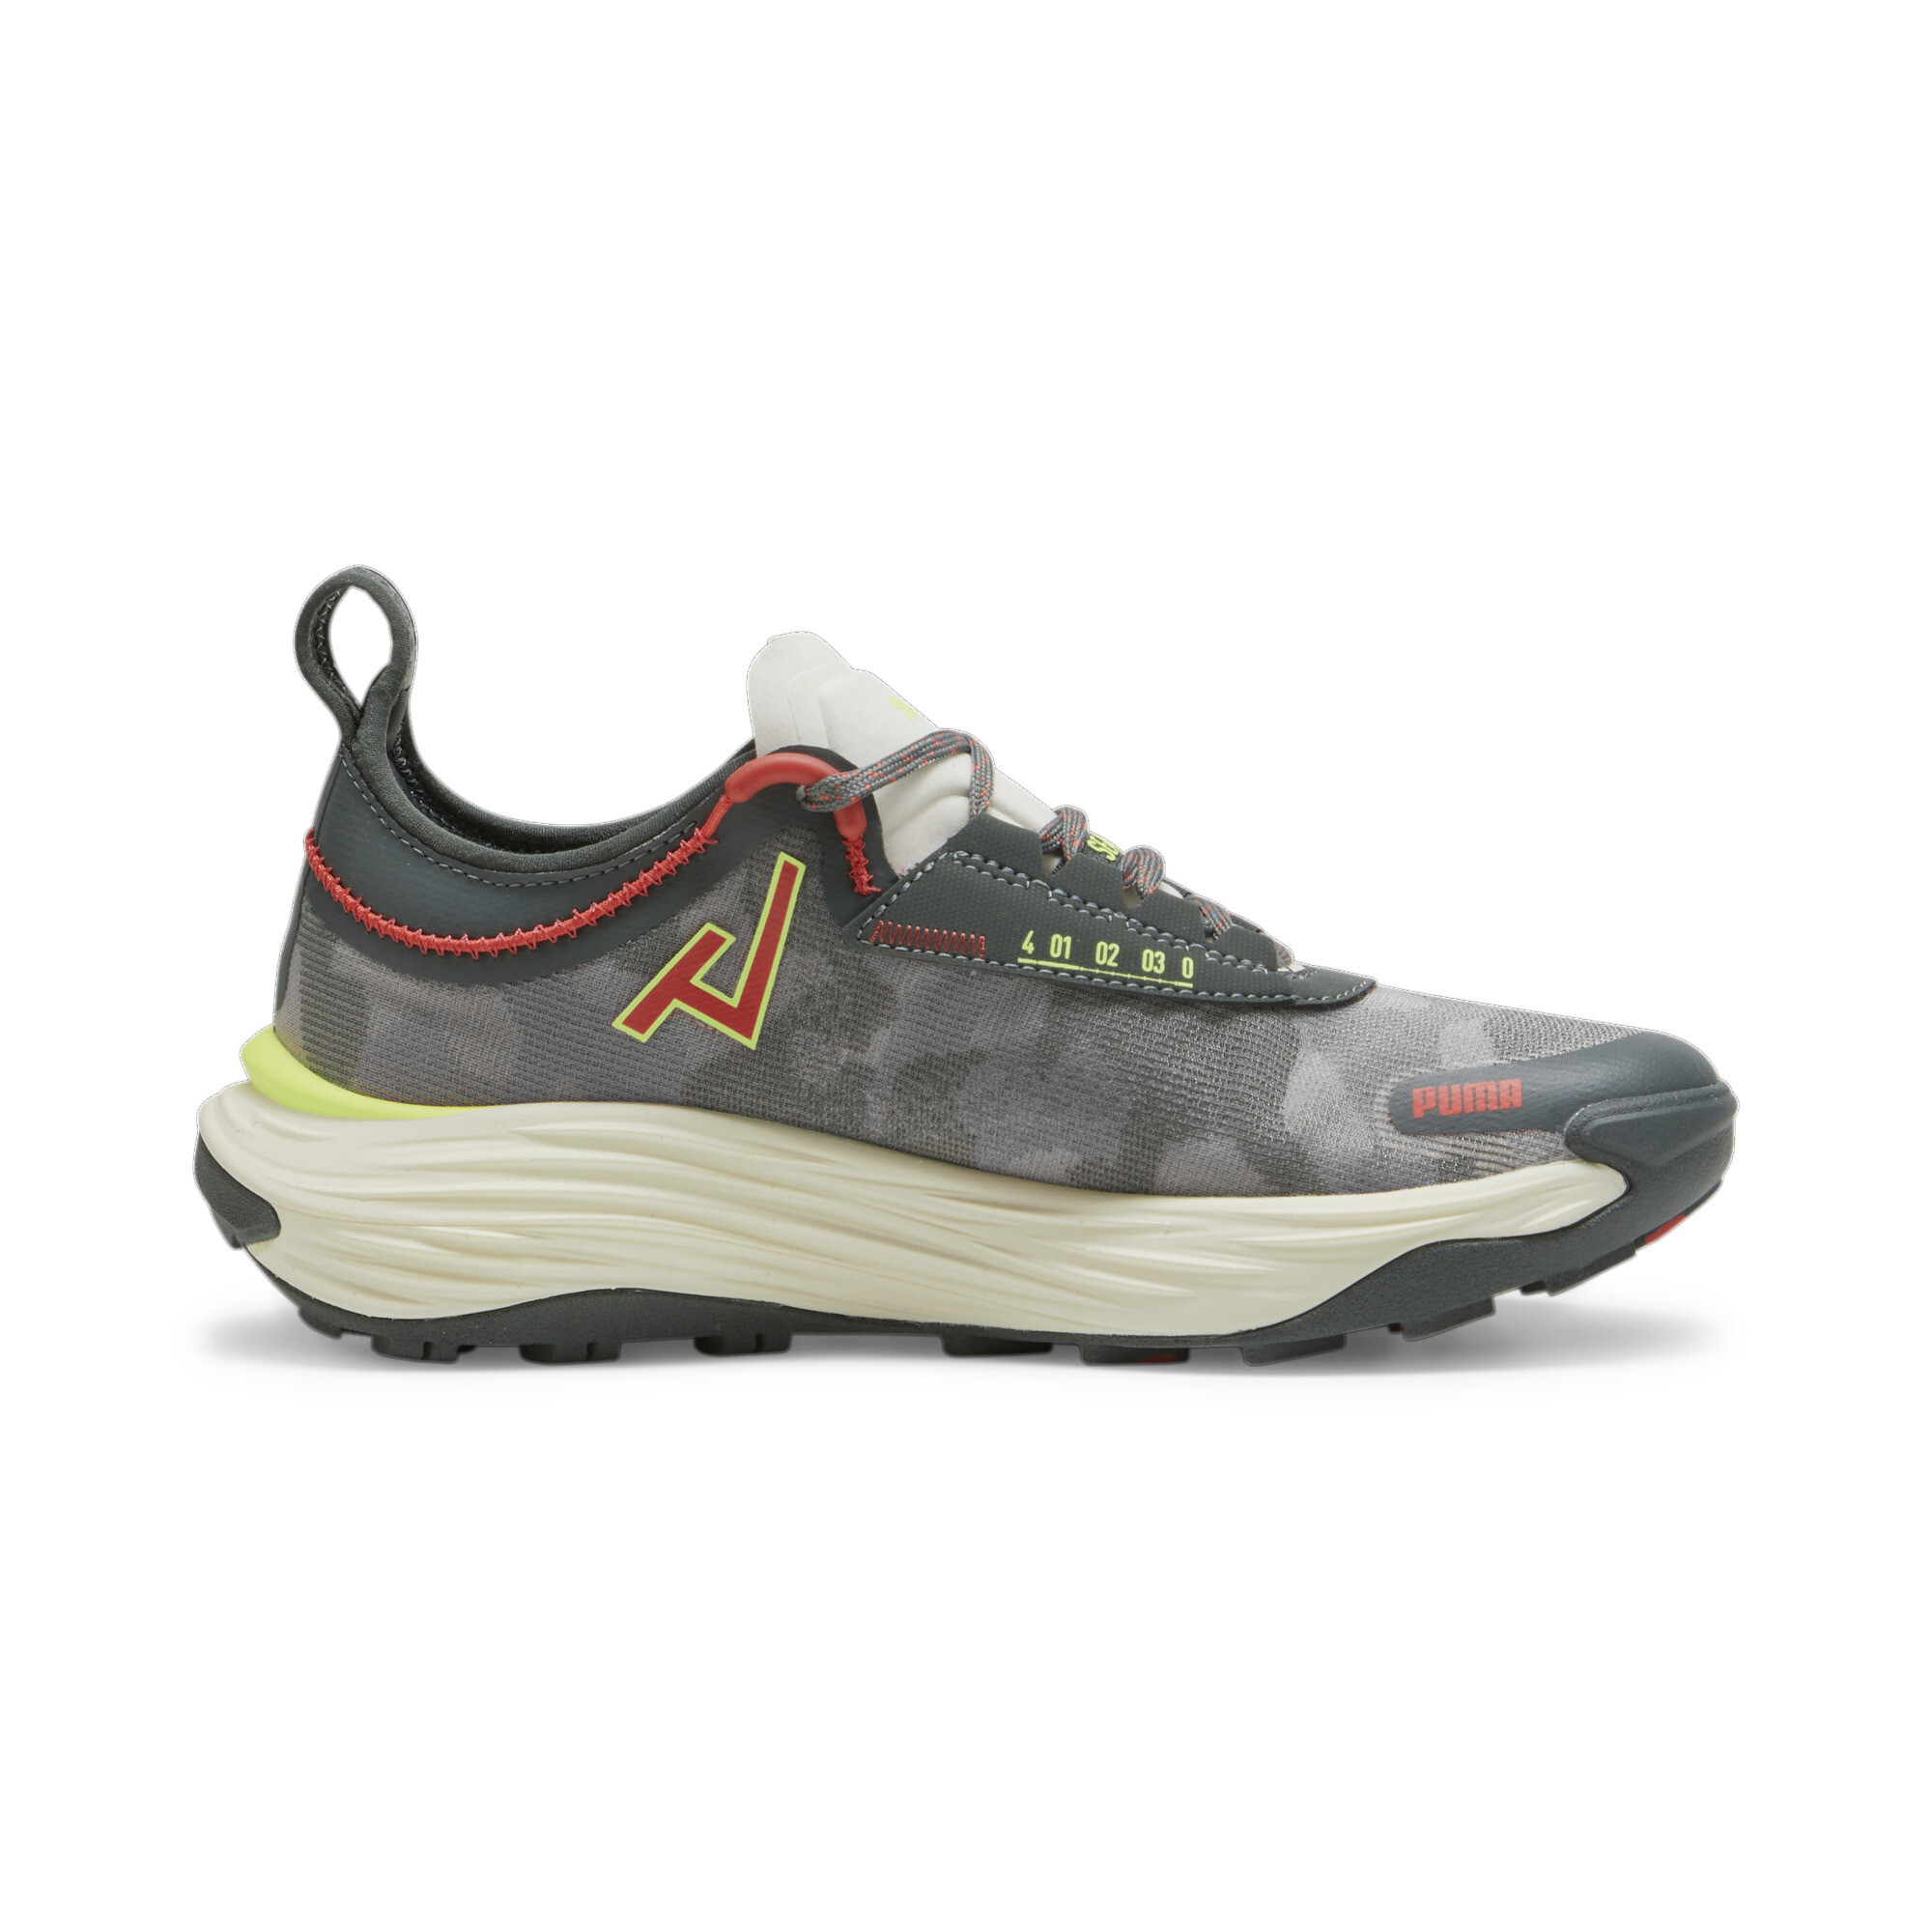 Women's PUMA Voyage NITROâ¢ 3 Trail Running Shoes In Gray, Size EU 36